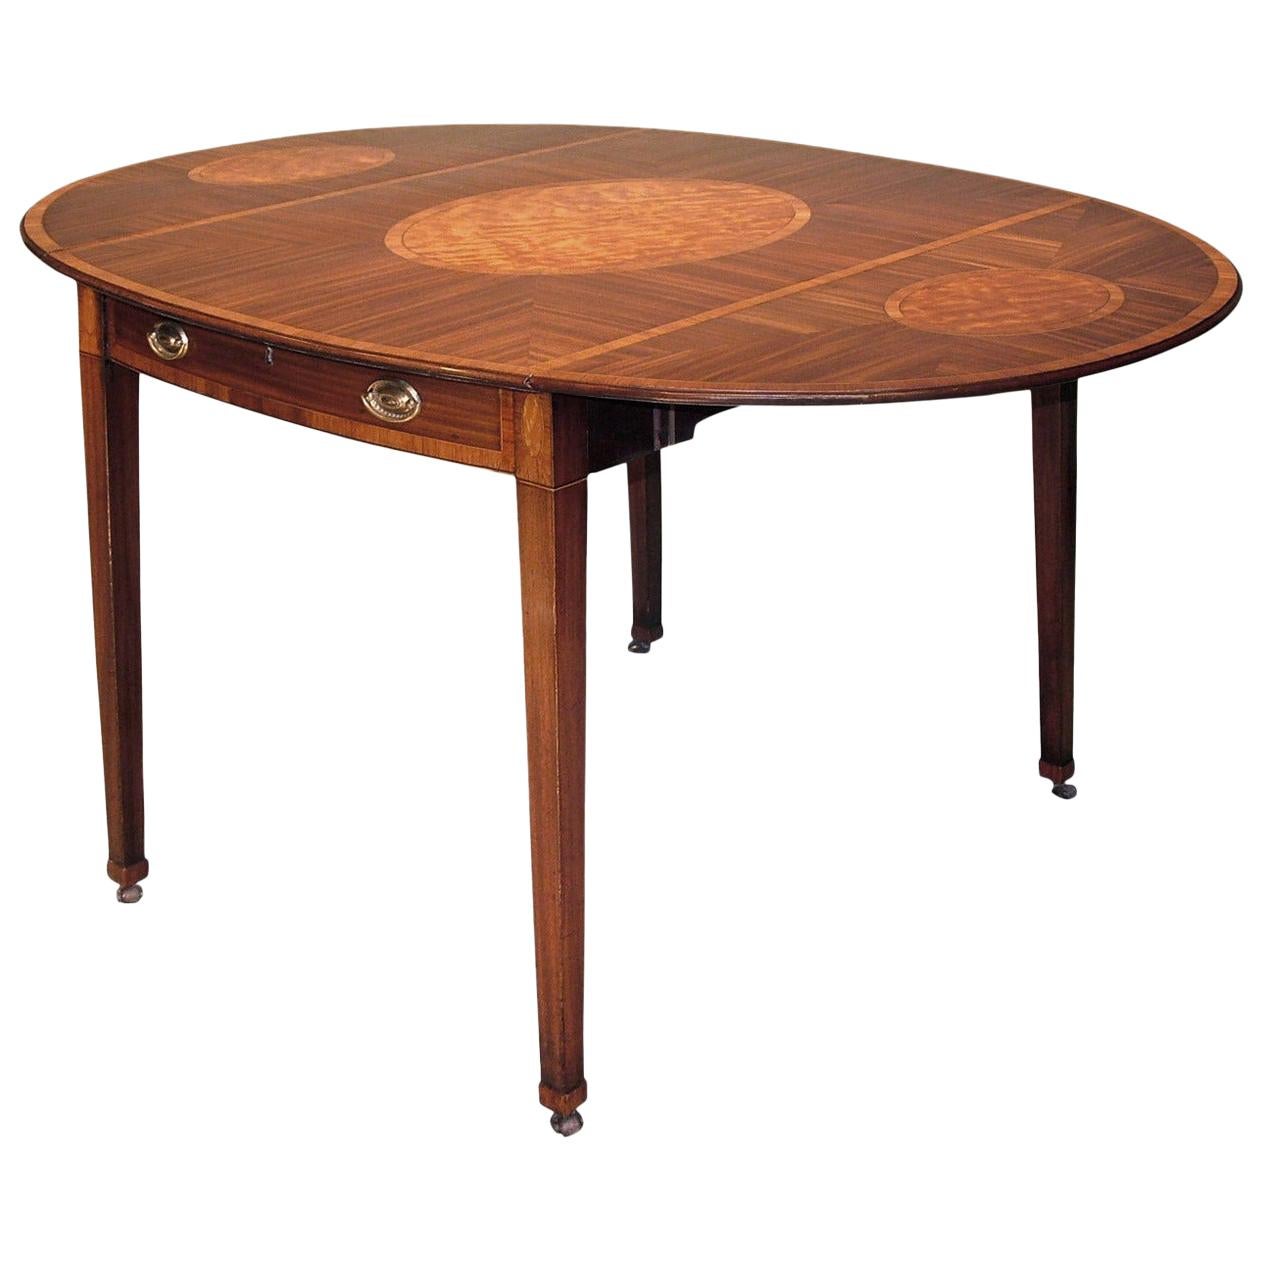 Ovaler Pembroke-Tisch aus Mahagoni des 18. Jahrhunderts